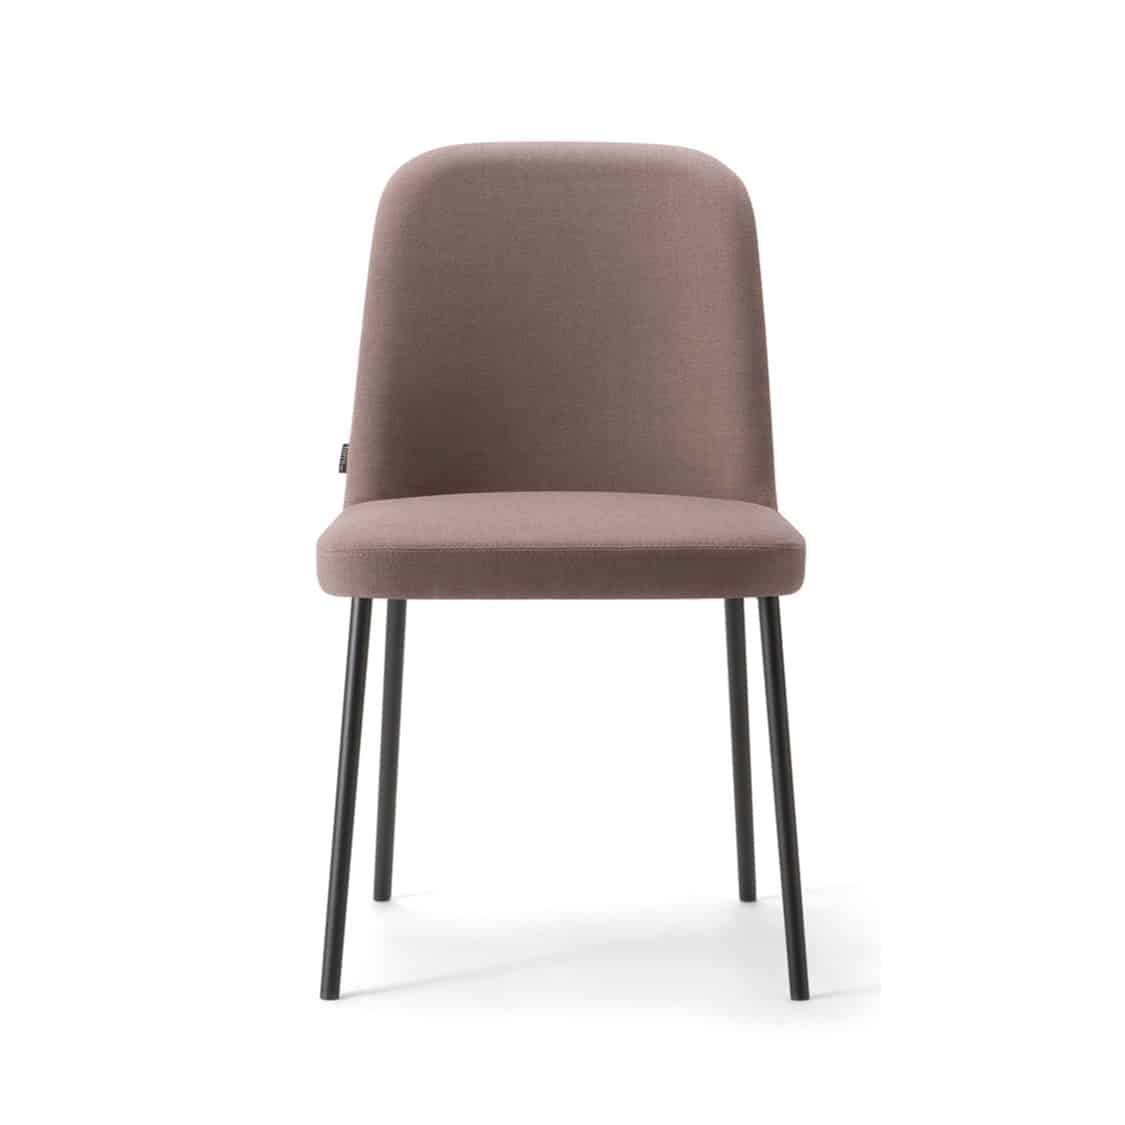 Da Vinci Side Chair 01 DeFrae Contract Furniture 113 Metal Legs